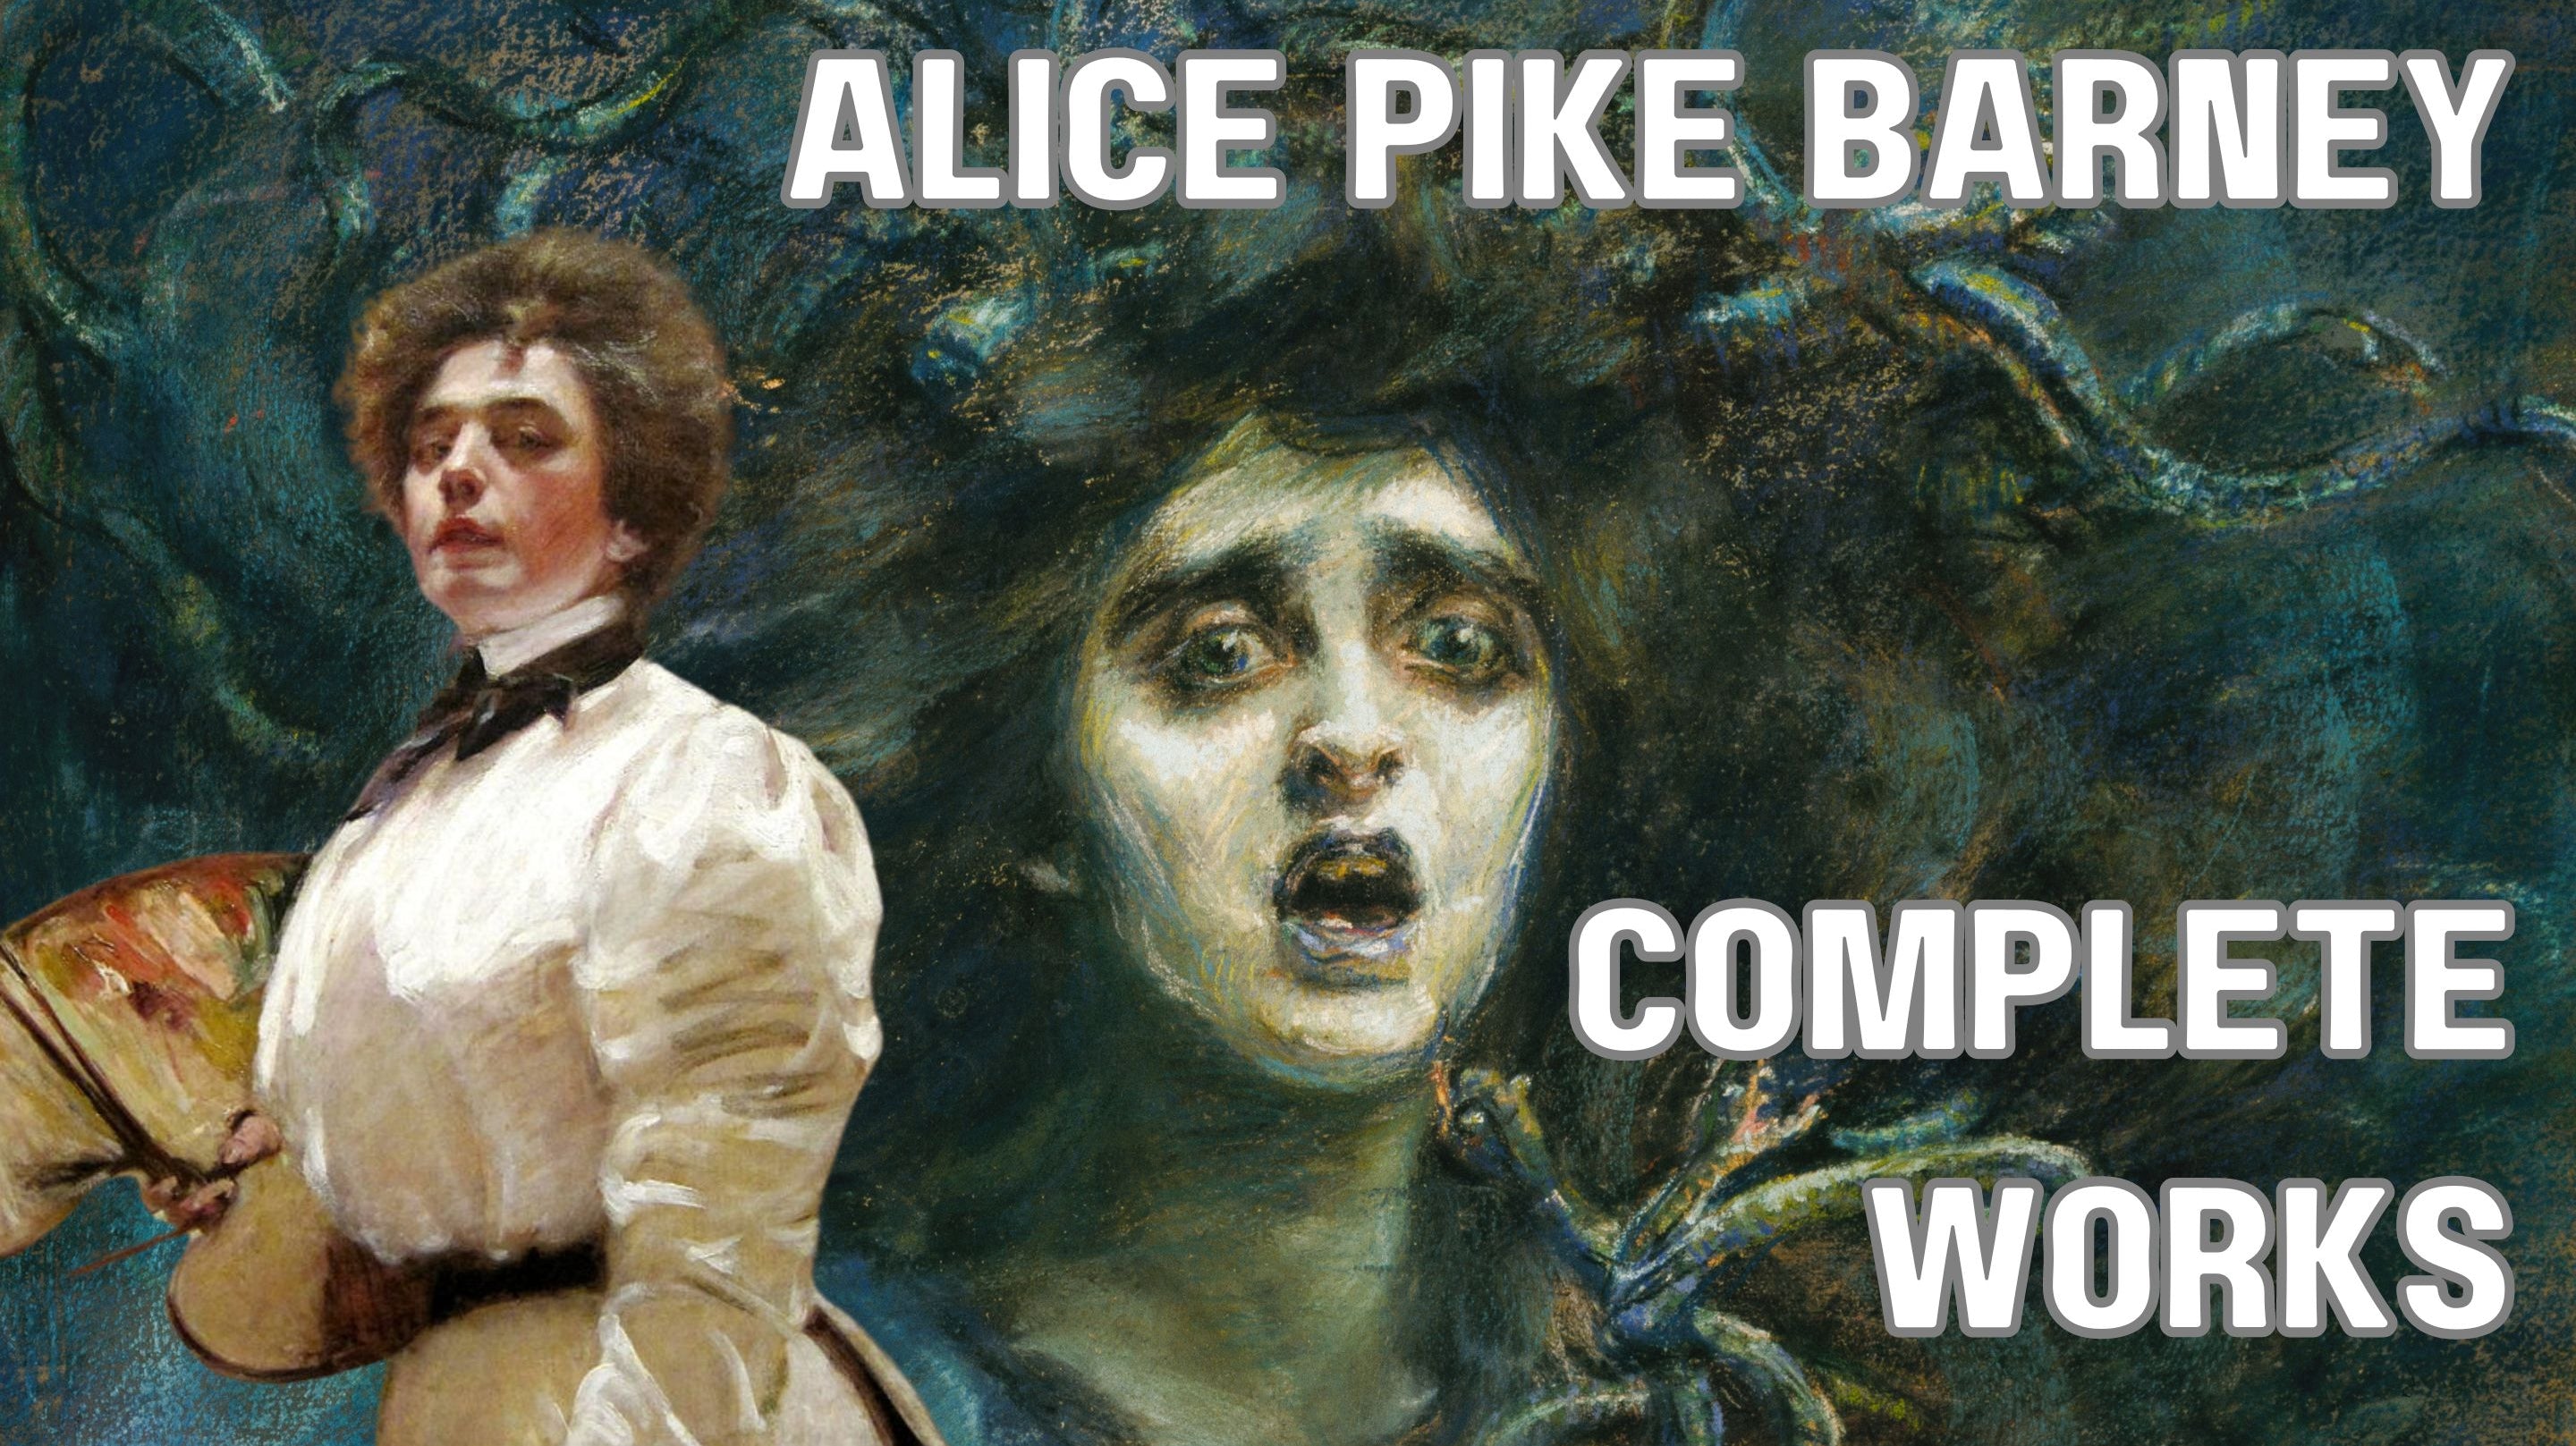 Alice Pike Barney Paintings